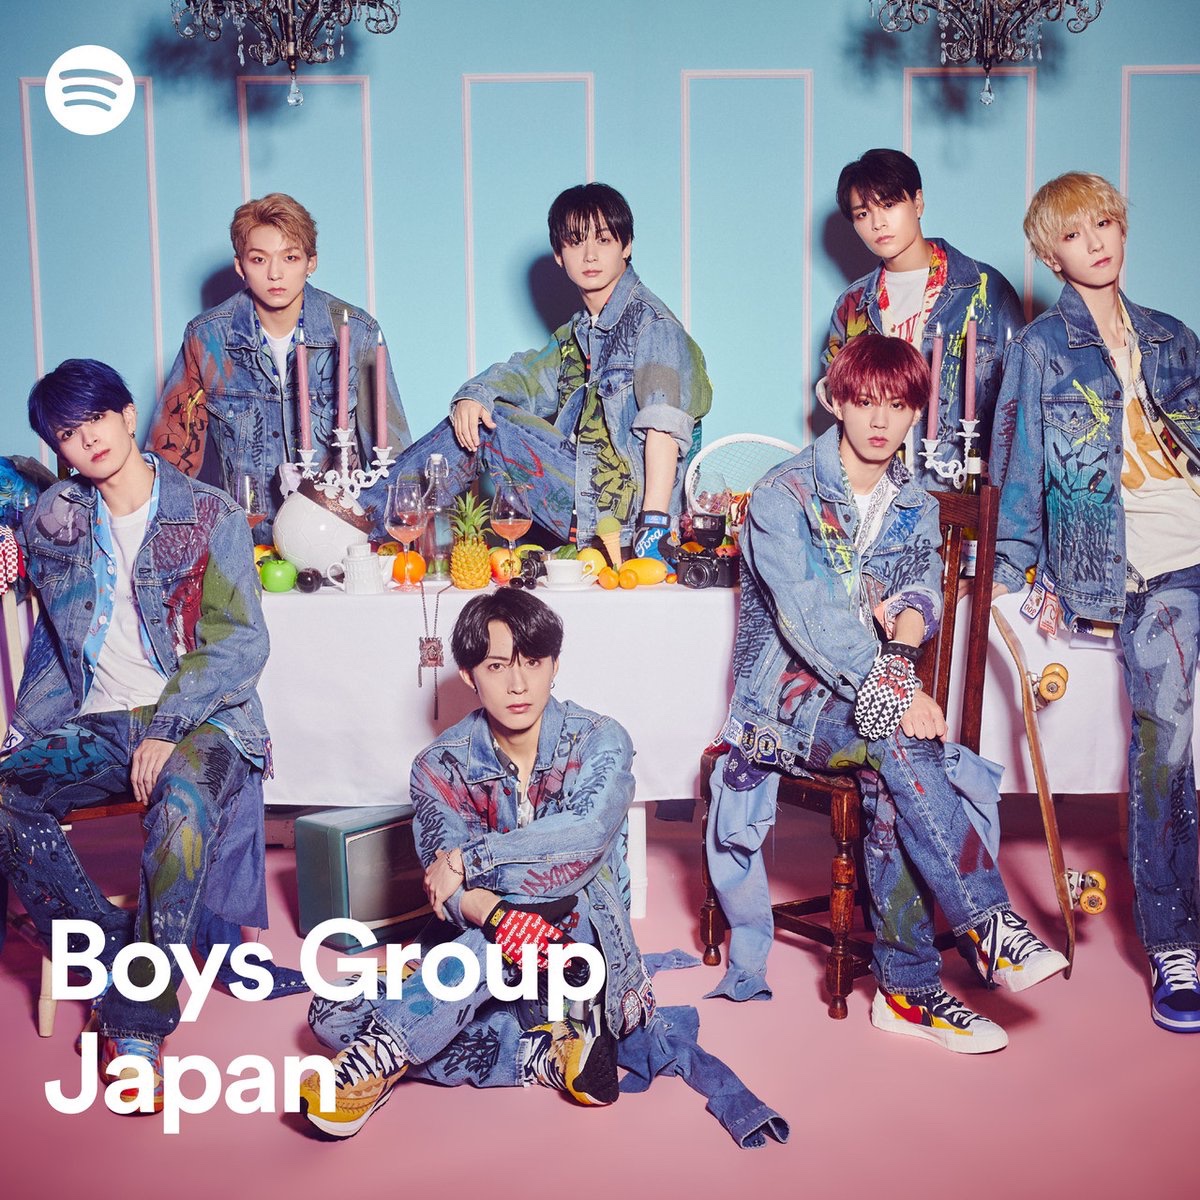 ［📌］Spotify「Boys Group Japan」のプレイリストカバーに選出していただきました！OCTPATH 3rd single「Like」もぜひ聴いてください！▷@SpotifyJP#OCTPATH_Like#OCTPATH #Spotify 